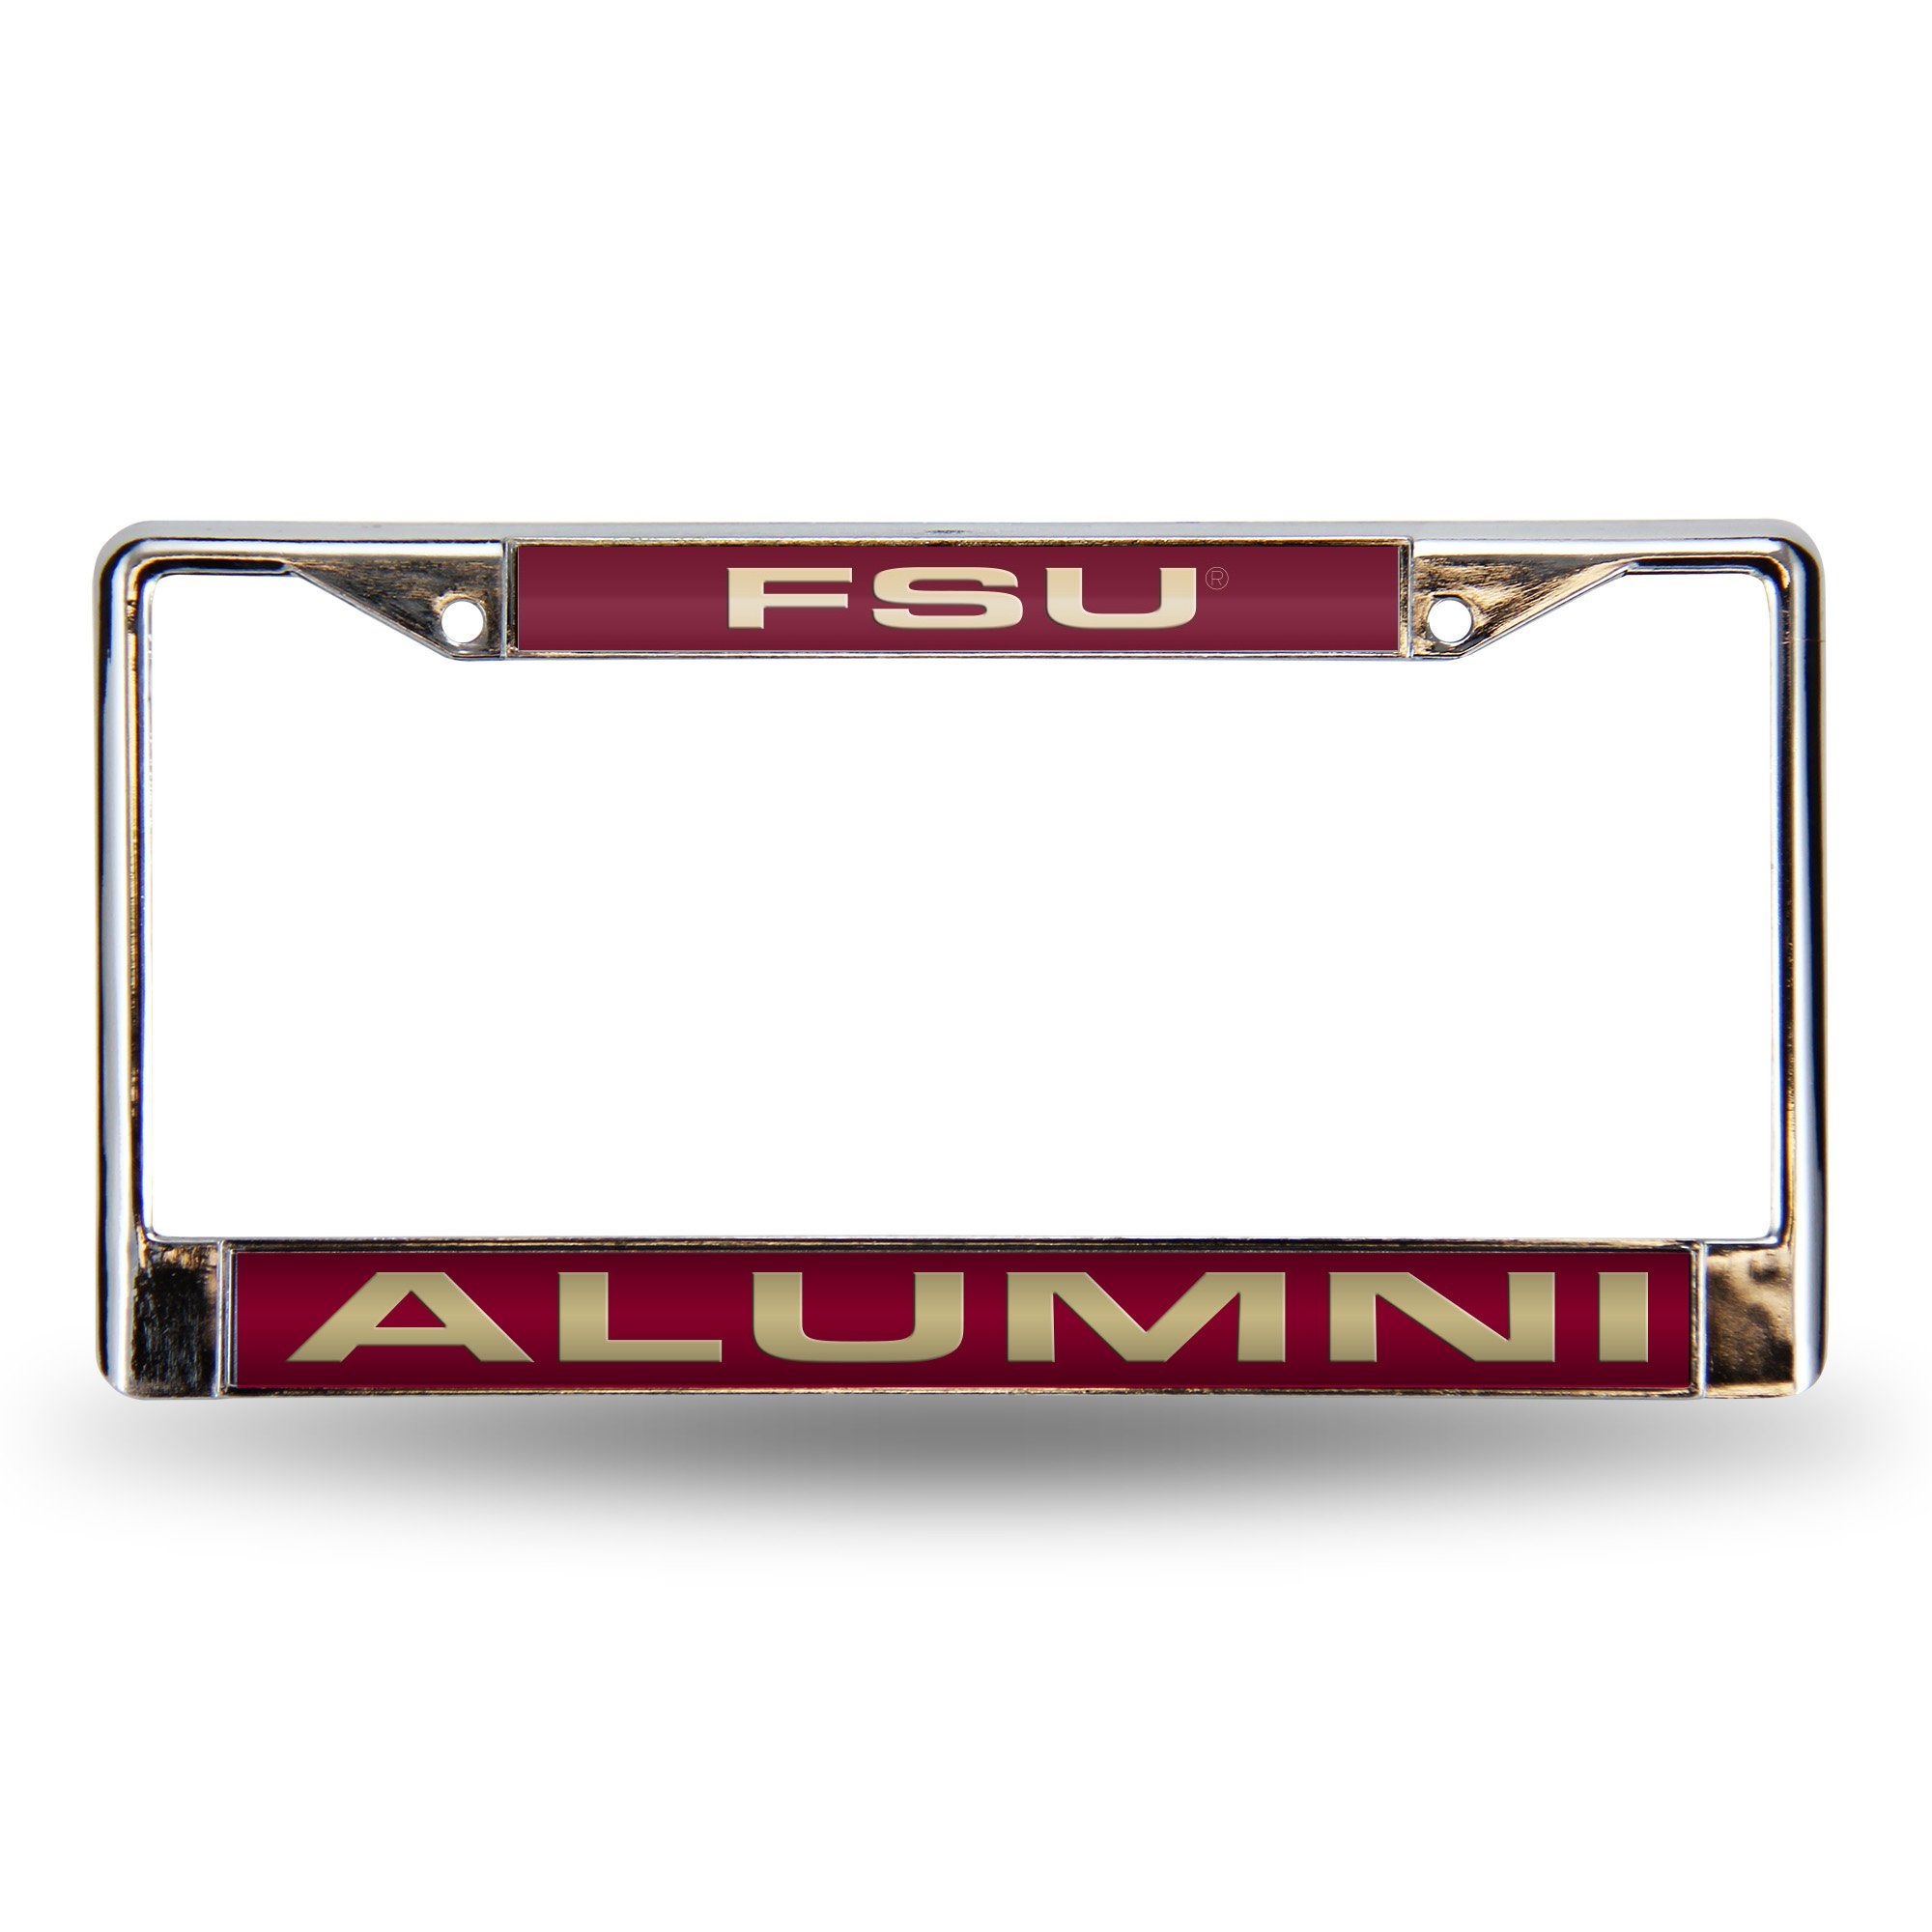 Florida State Alumni Laser Chrome License Plate Frame